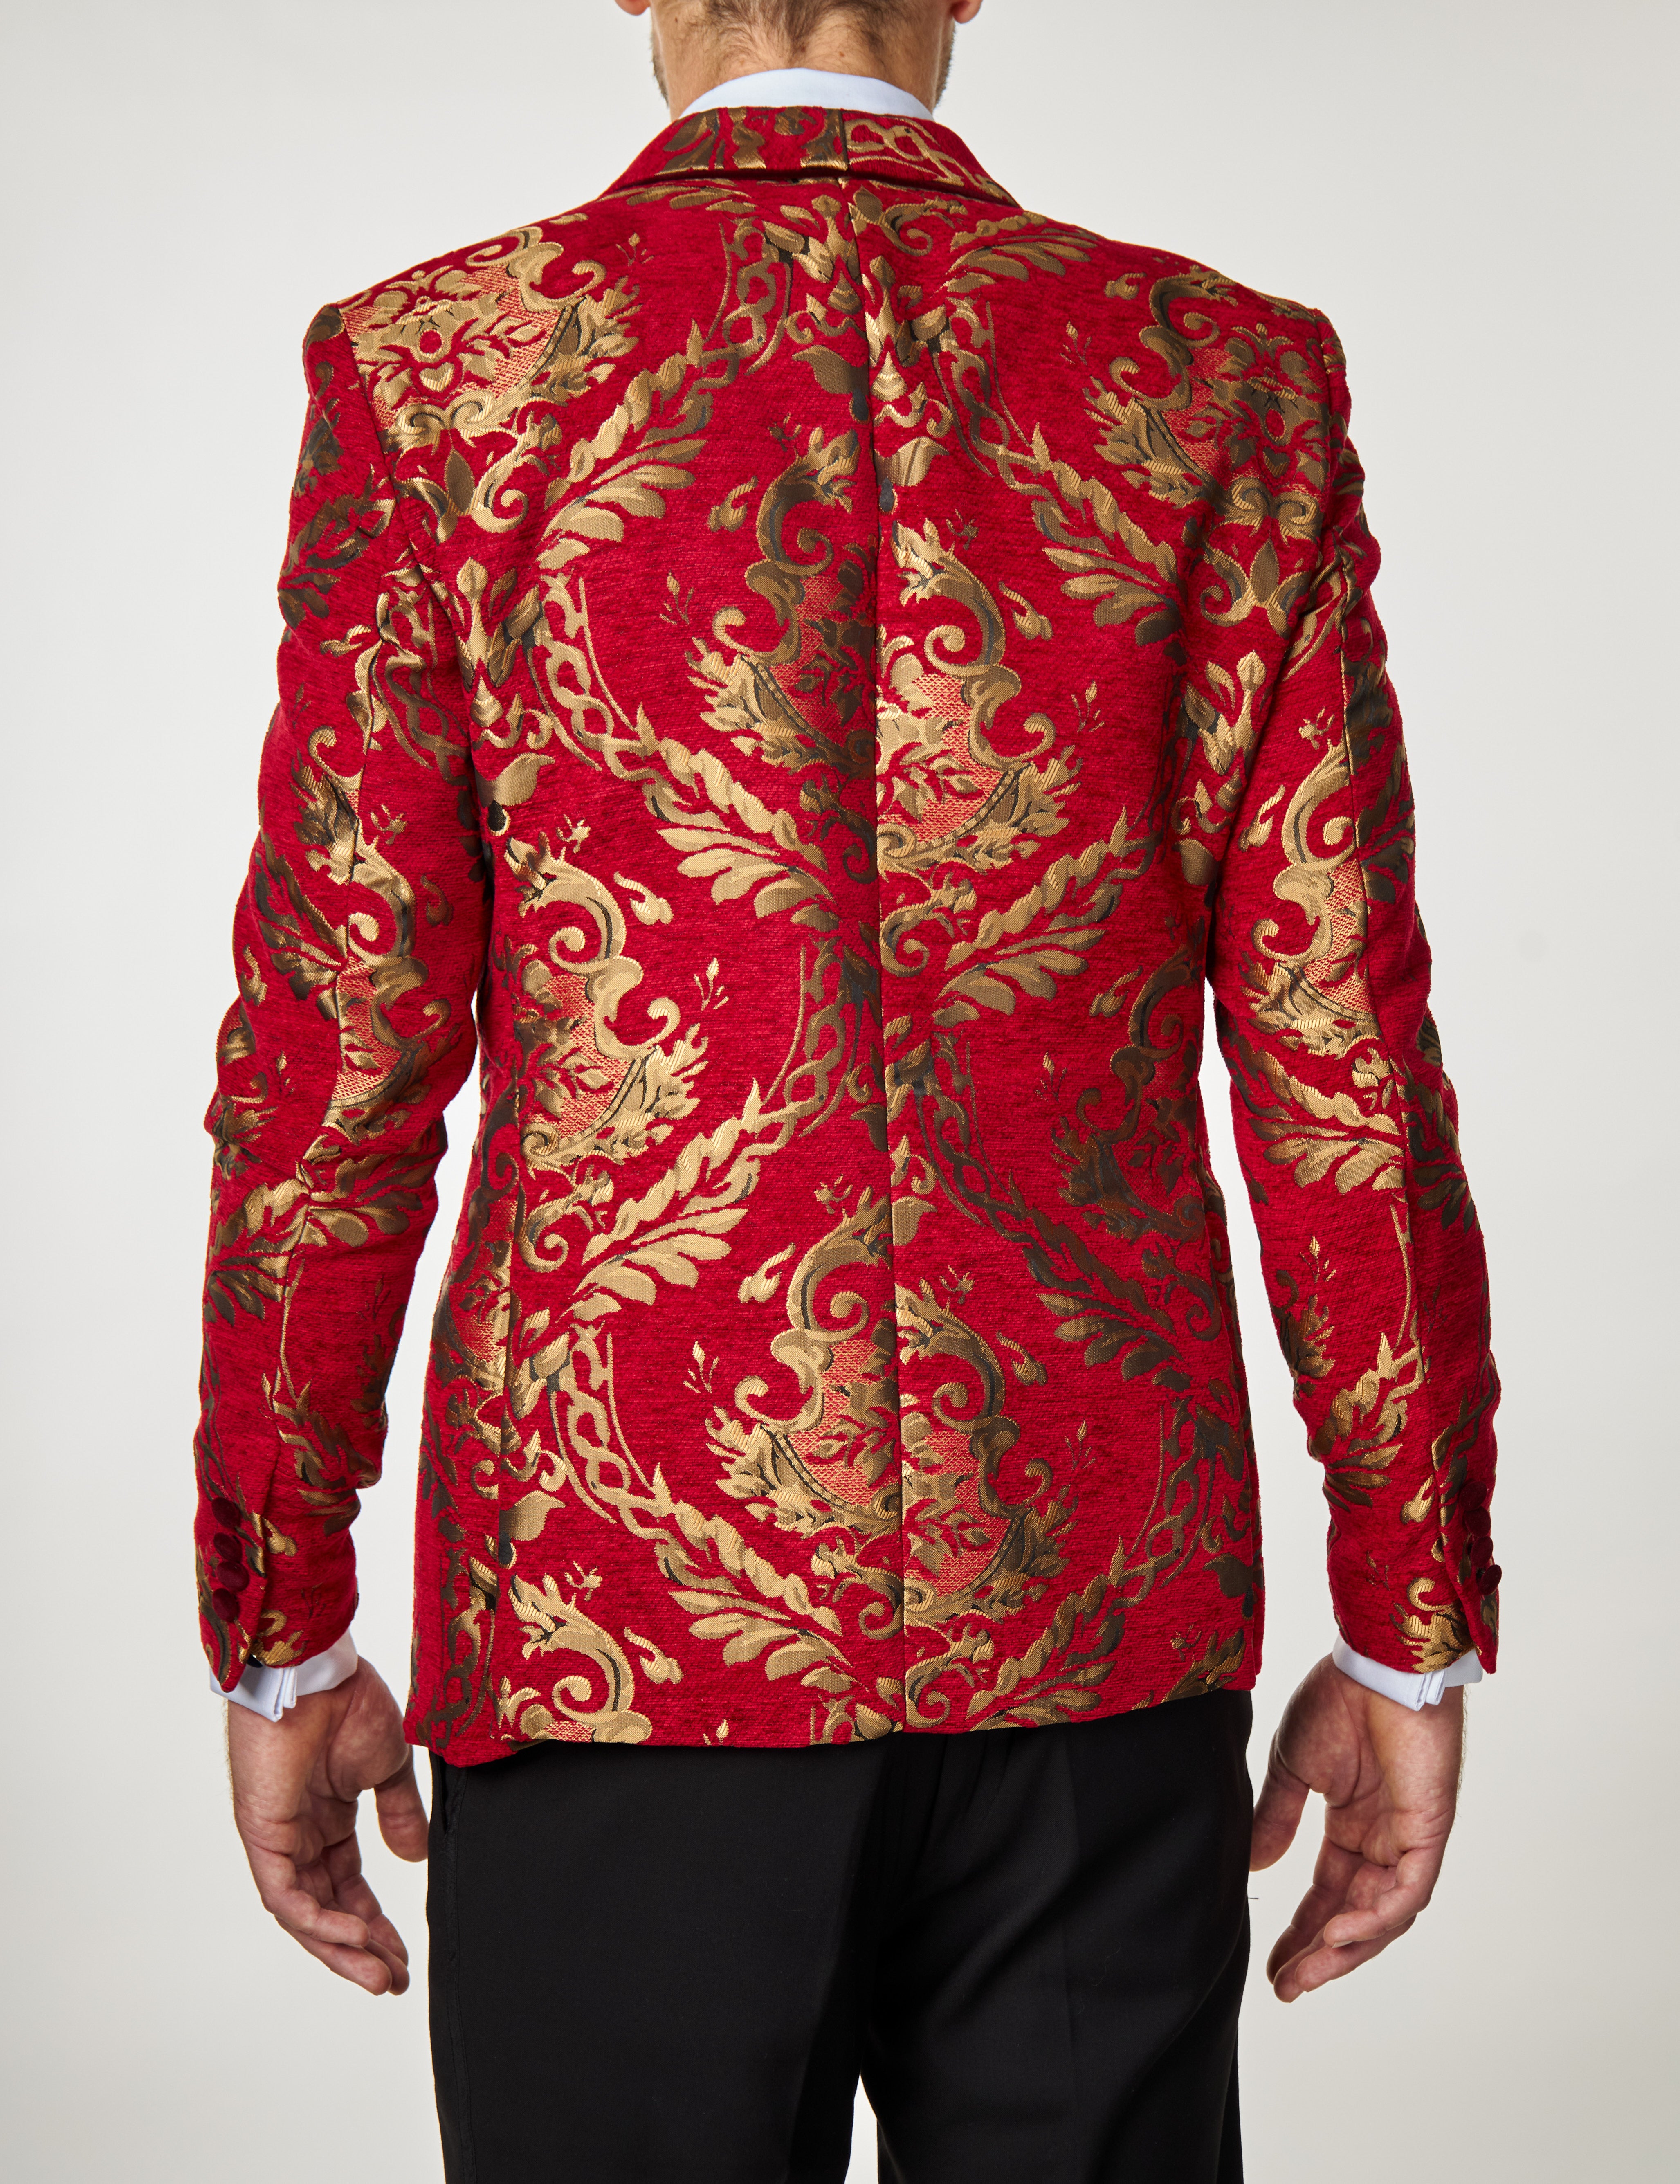 Gold Brocade Paisley Print on Crimson Red Jacquard Jacket